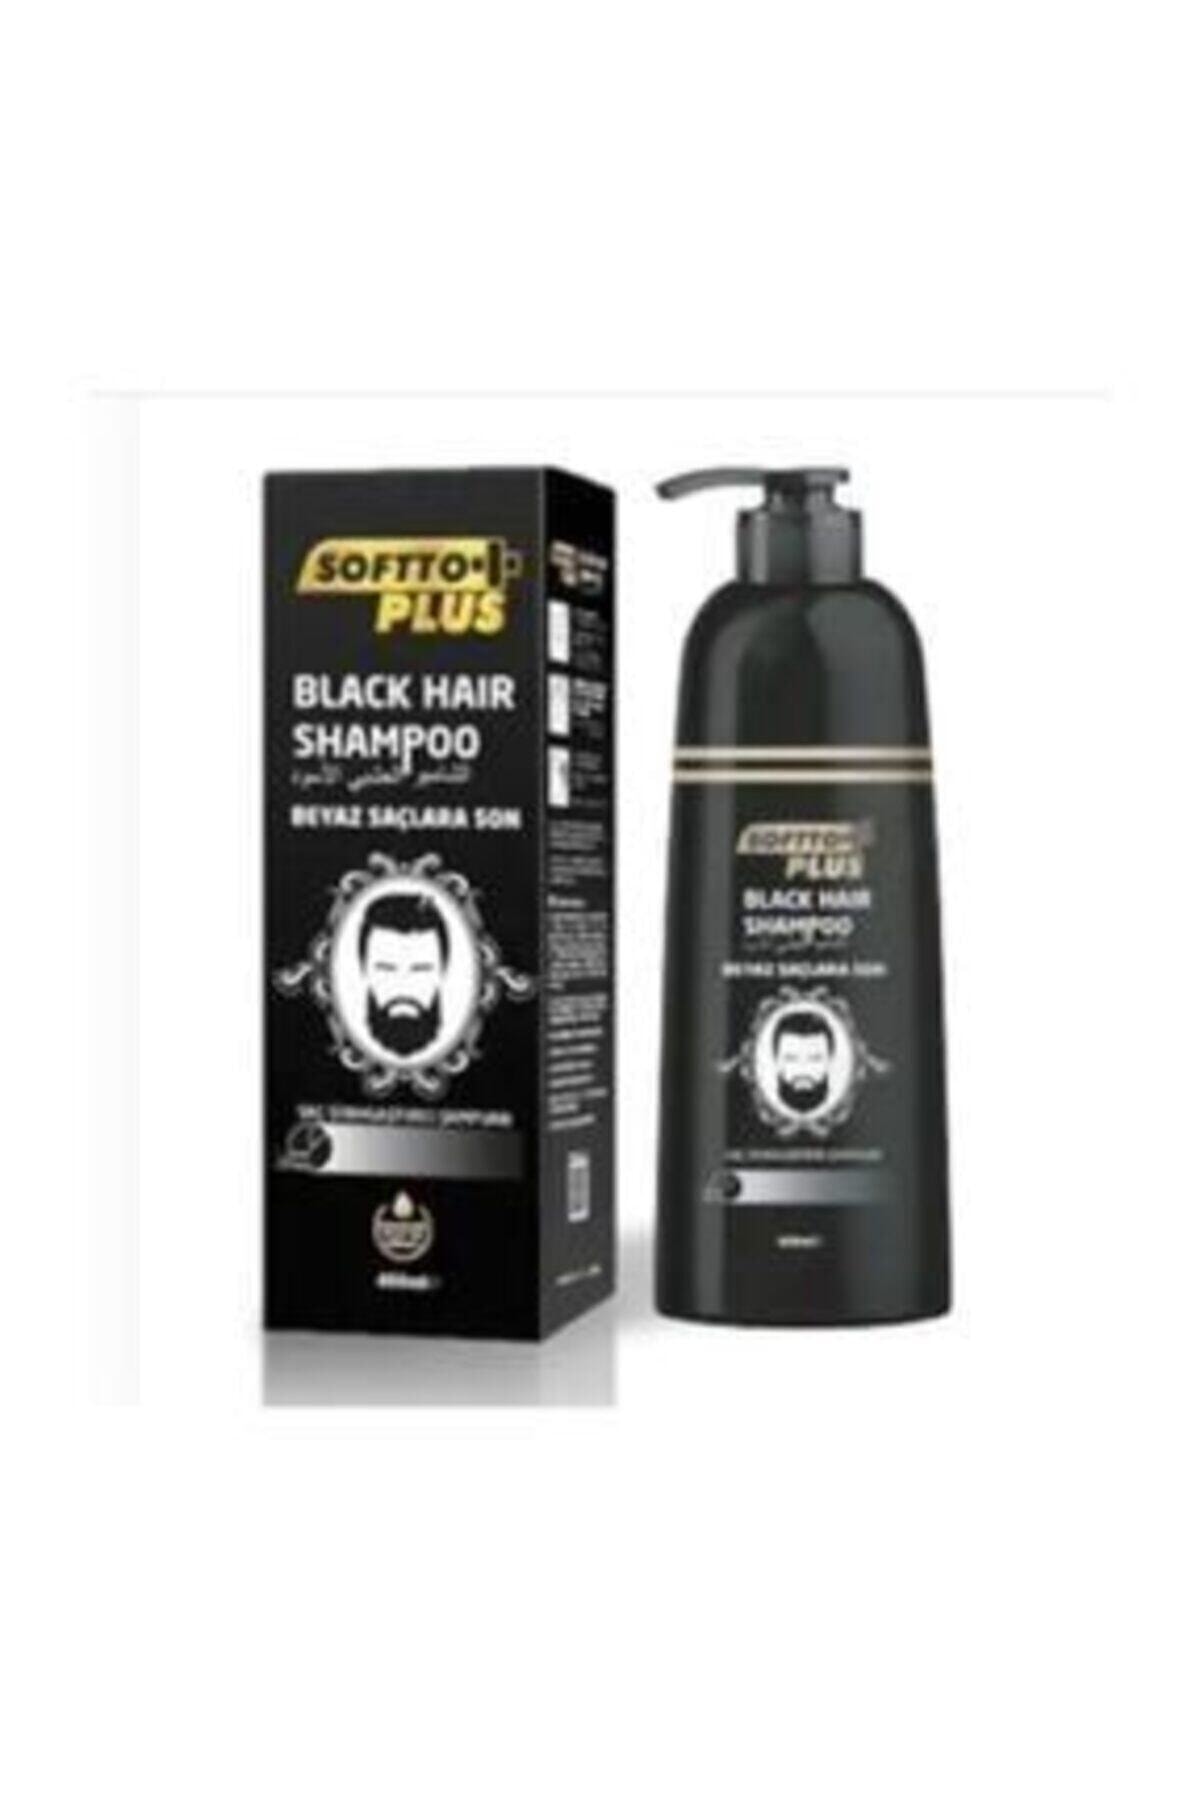 Softto Plus Softto +plus Balck Haır Shampoo Saç Siyahlatıcı Şampuan